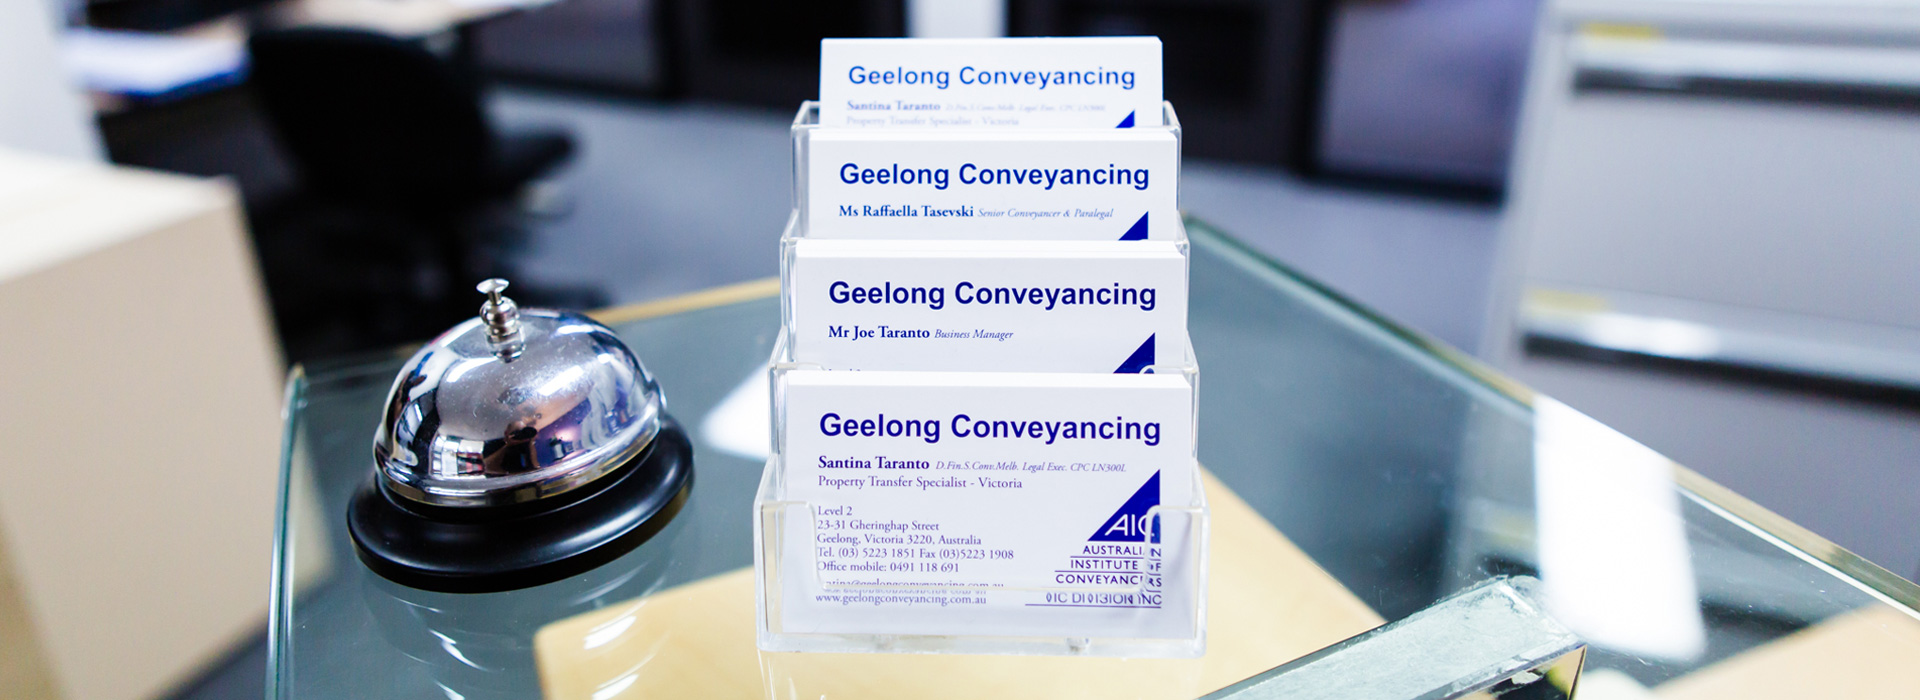 Geelong Conveyancing Business Cards